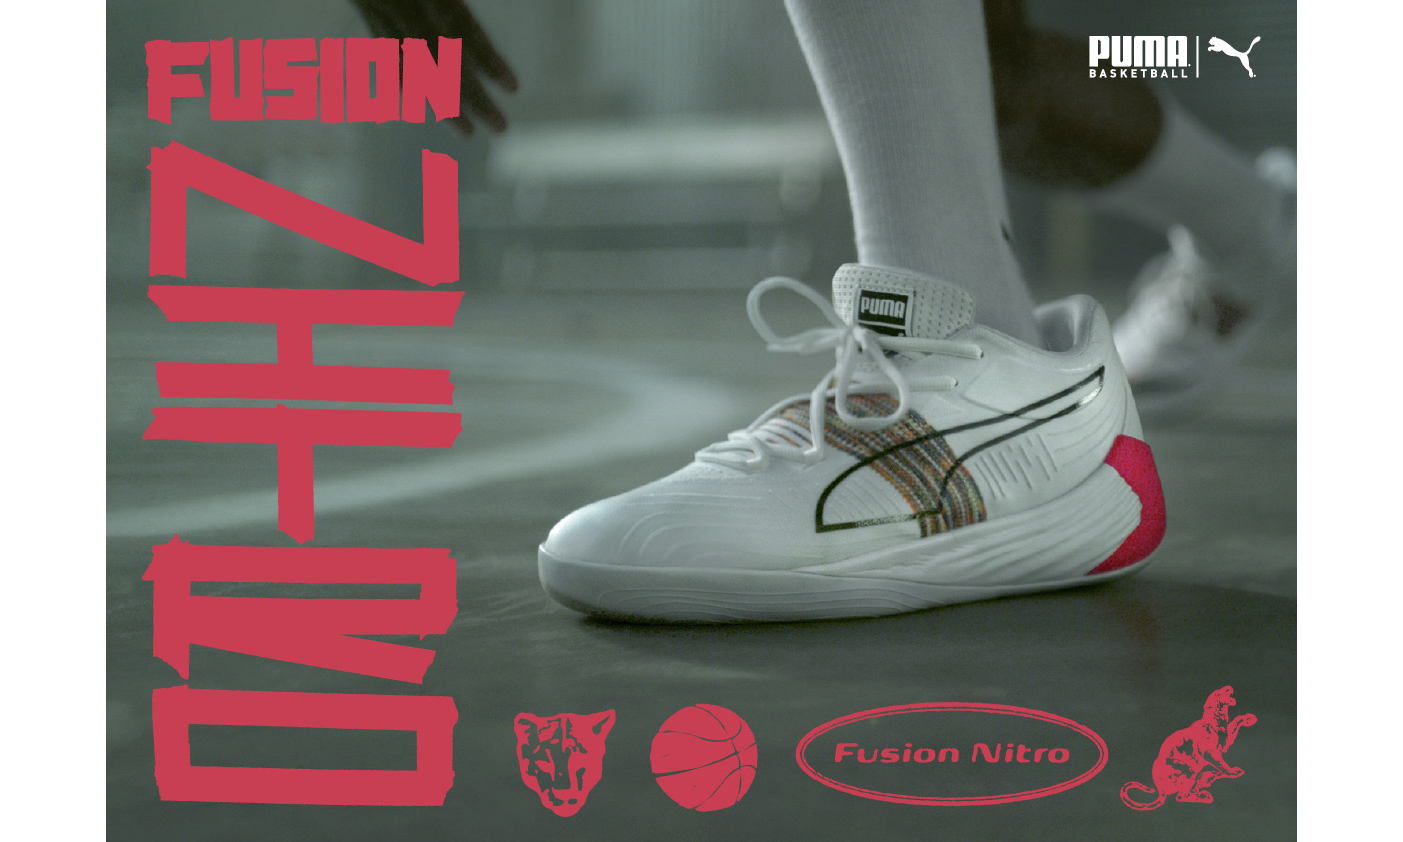 PUMA 首款采用氮气中底篮球鞋 FUSION NITRO 登场